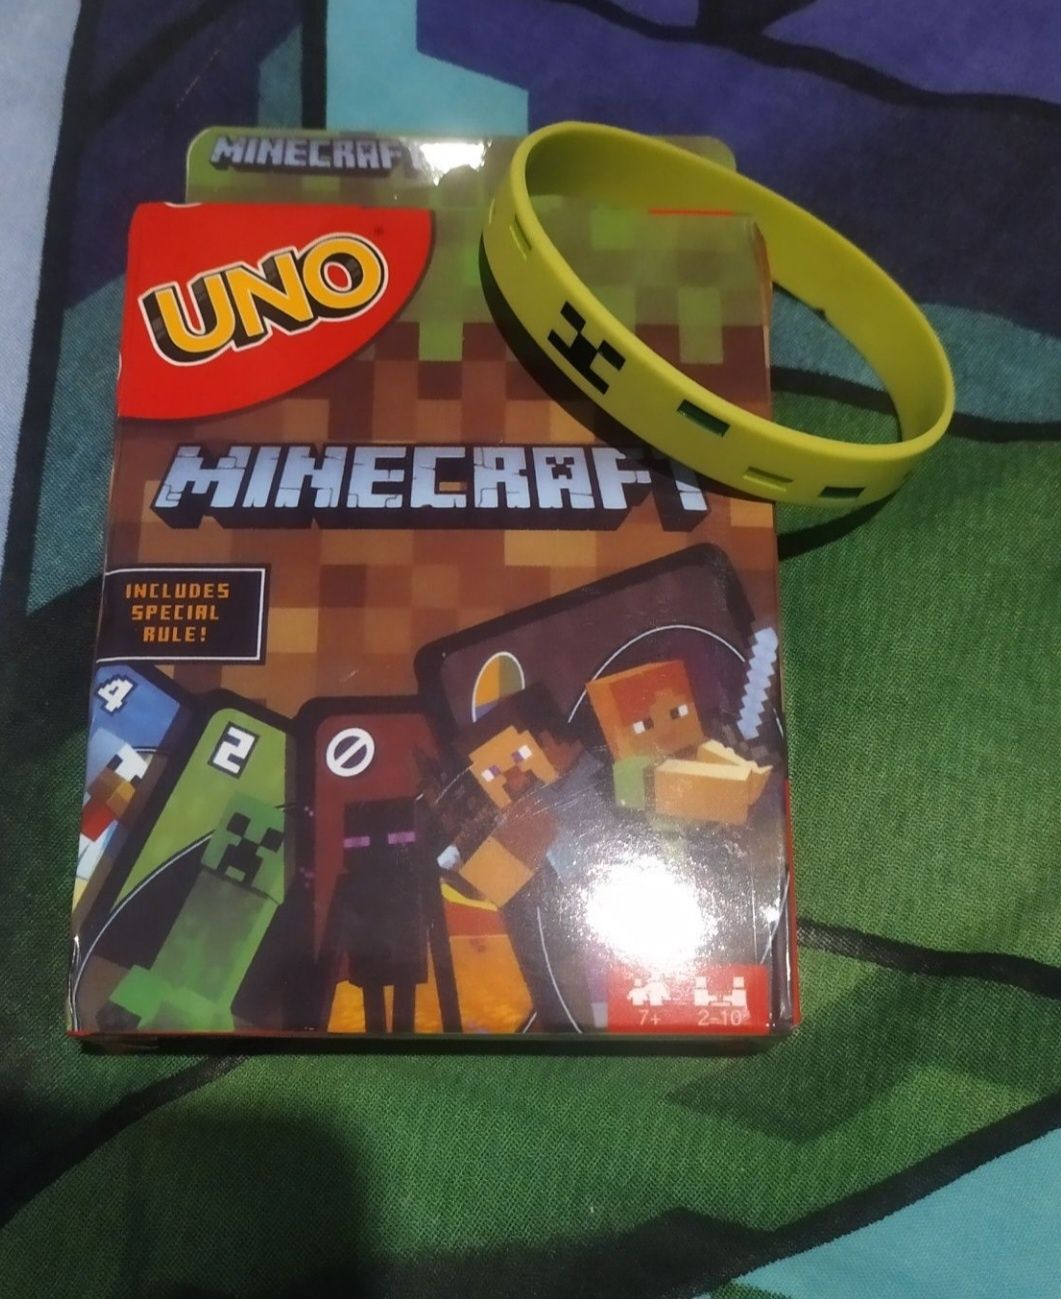 Nowy zestaw Minecraft Uno i bransoletka Creeper.